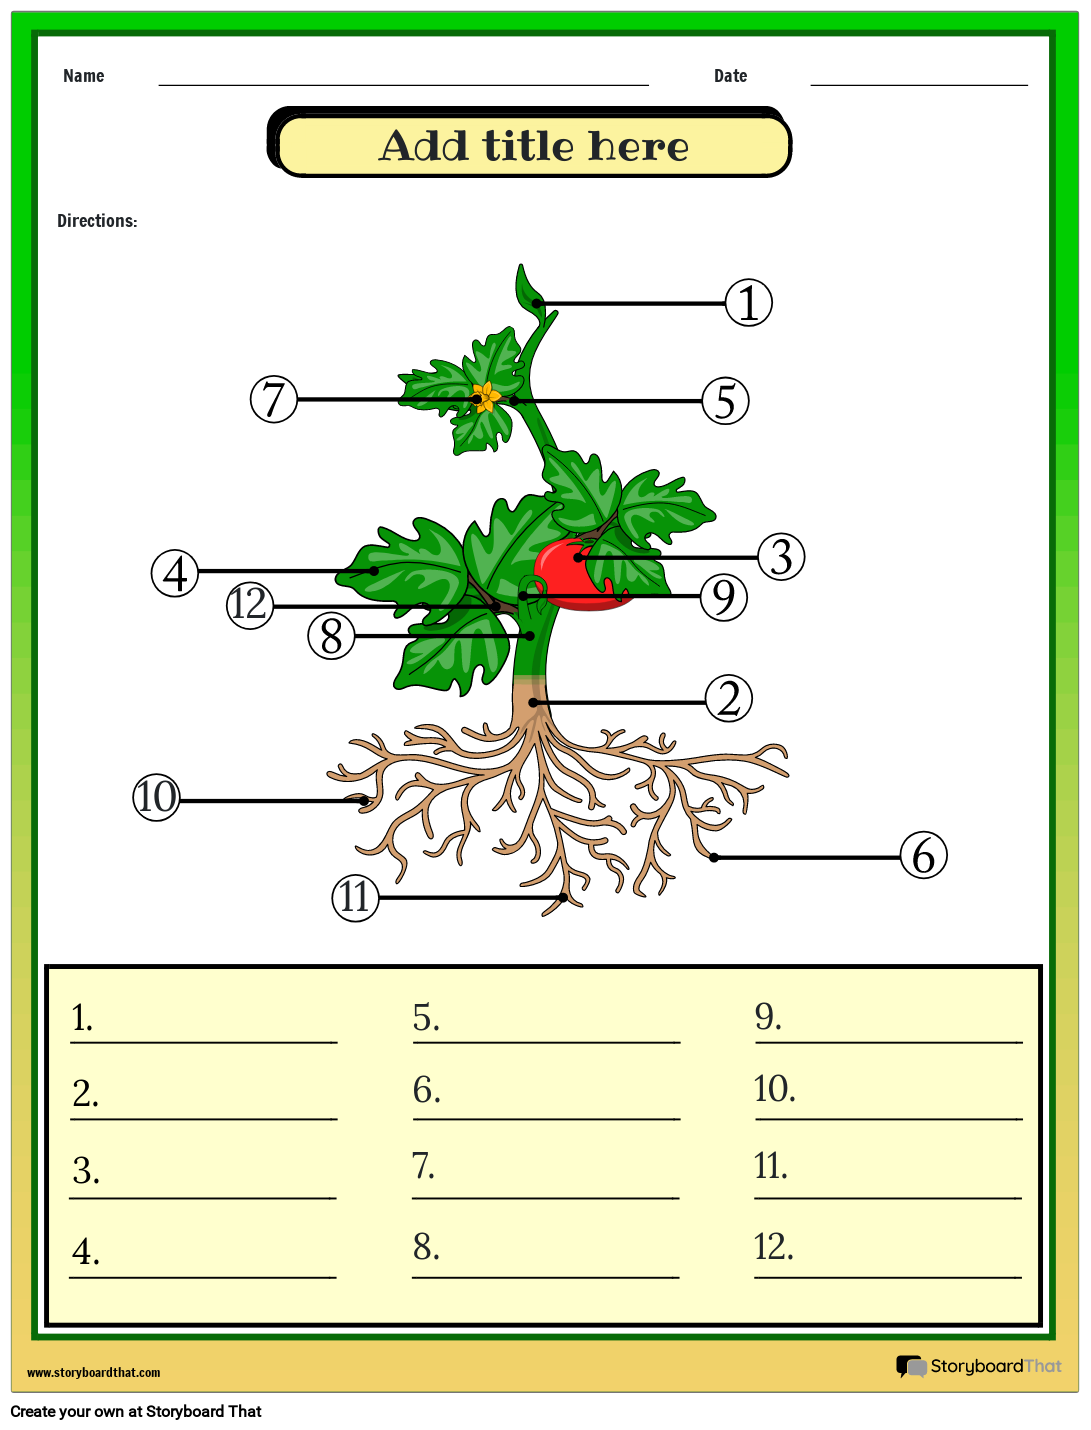 Plant's Anatomy Worksheet (Advanced)